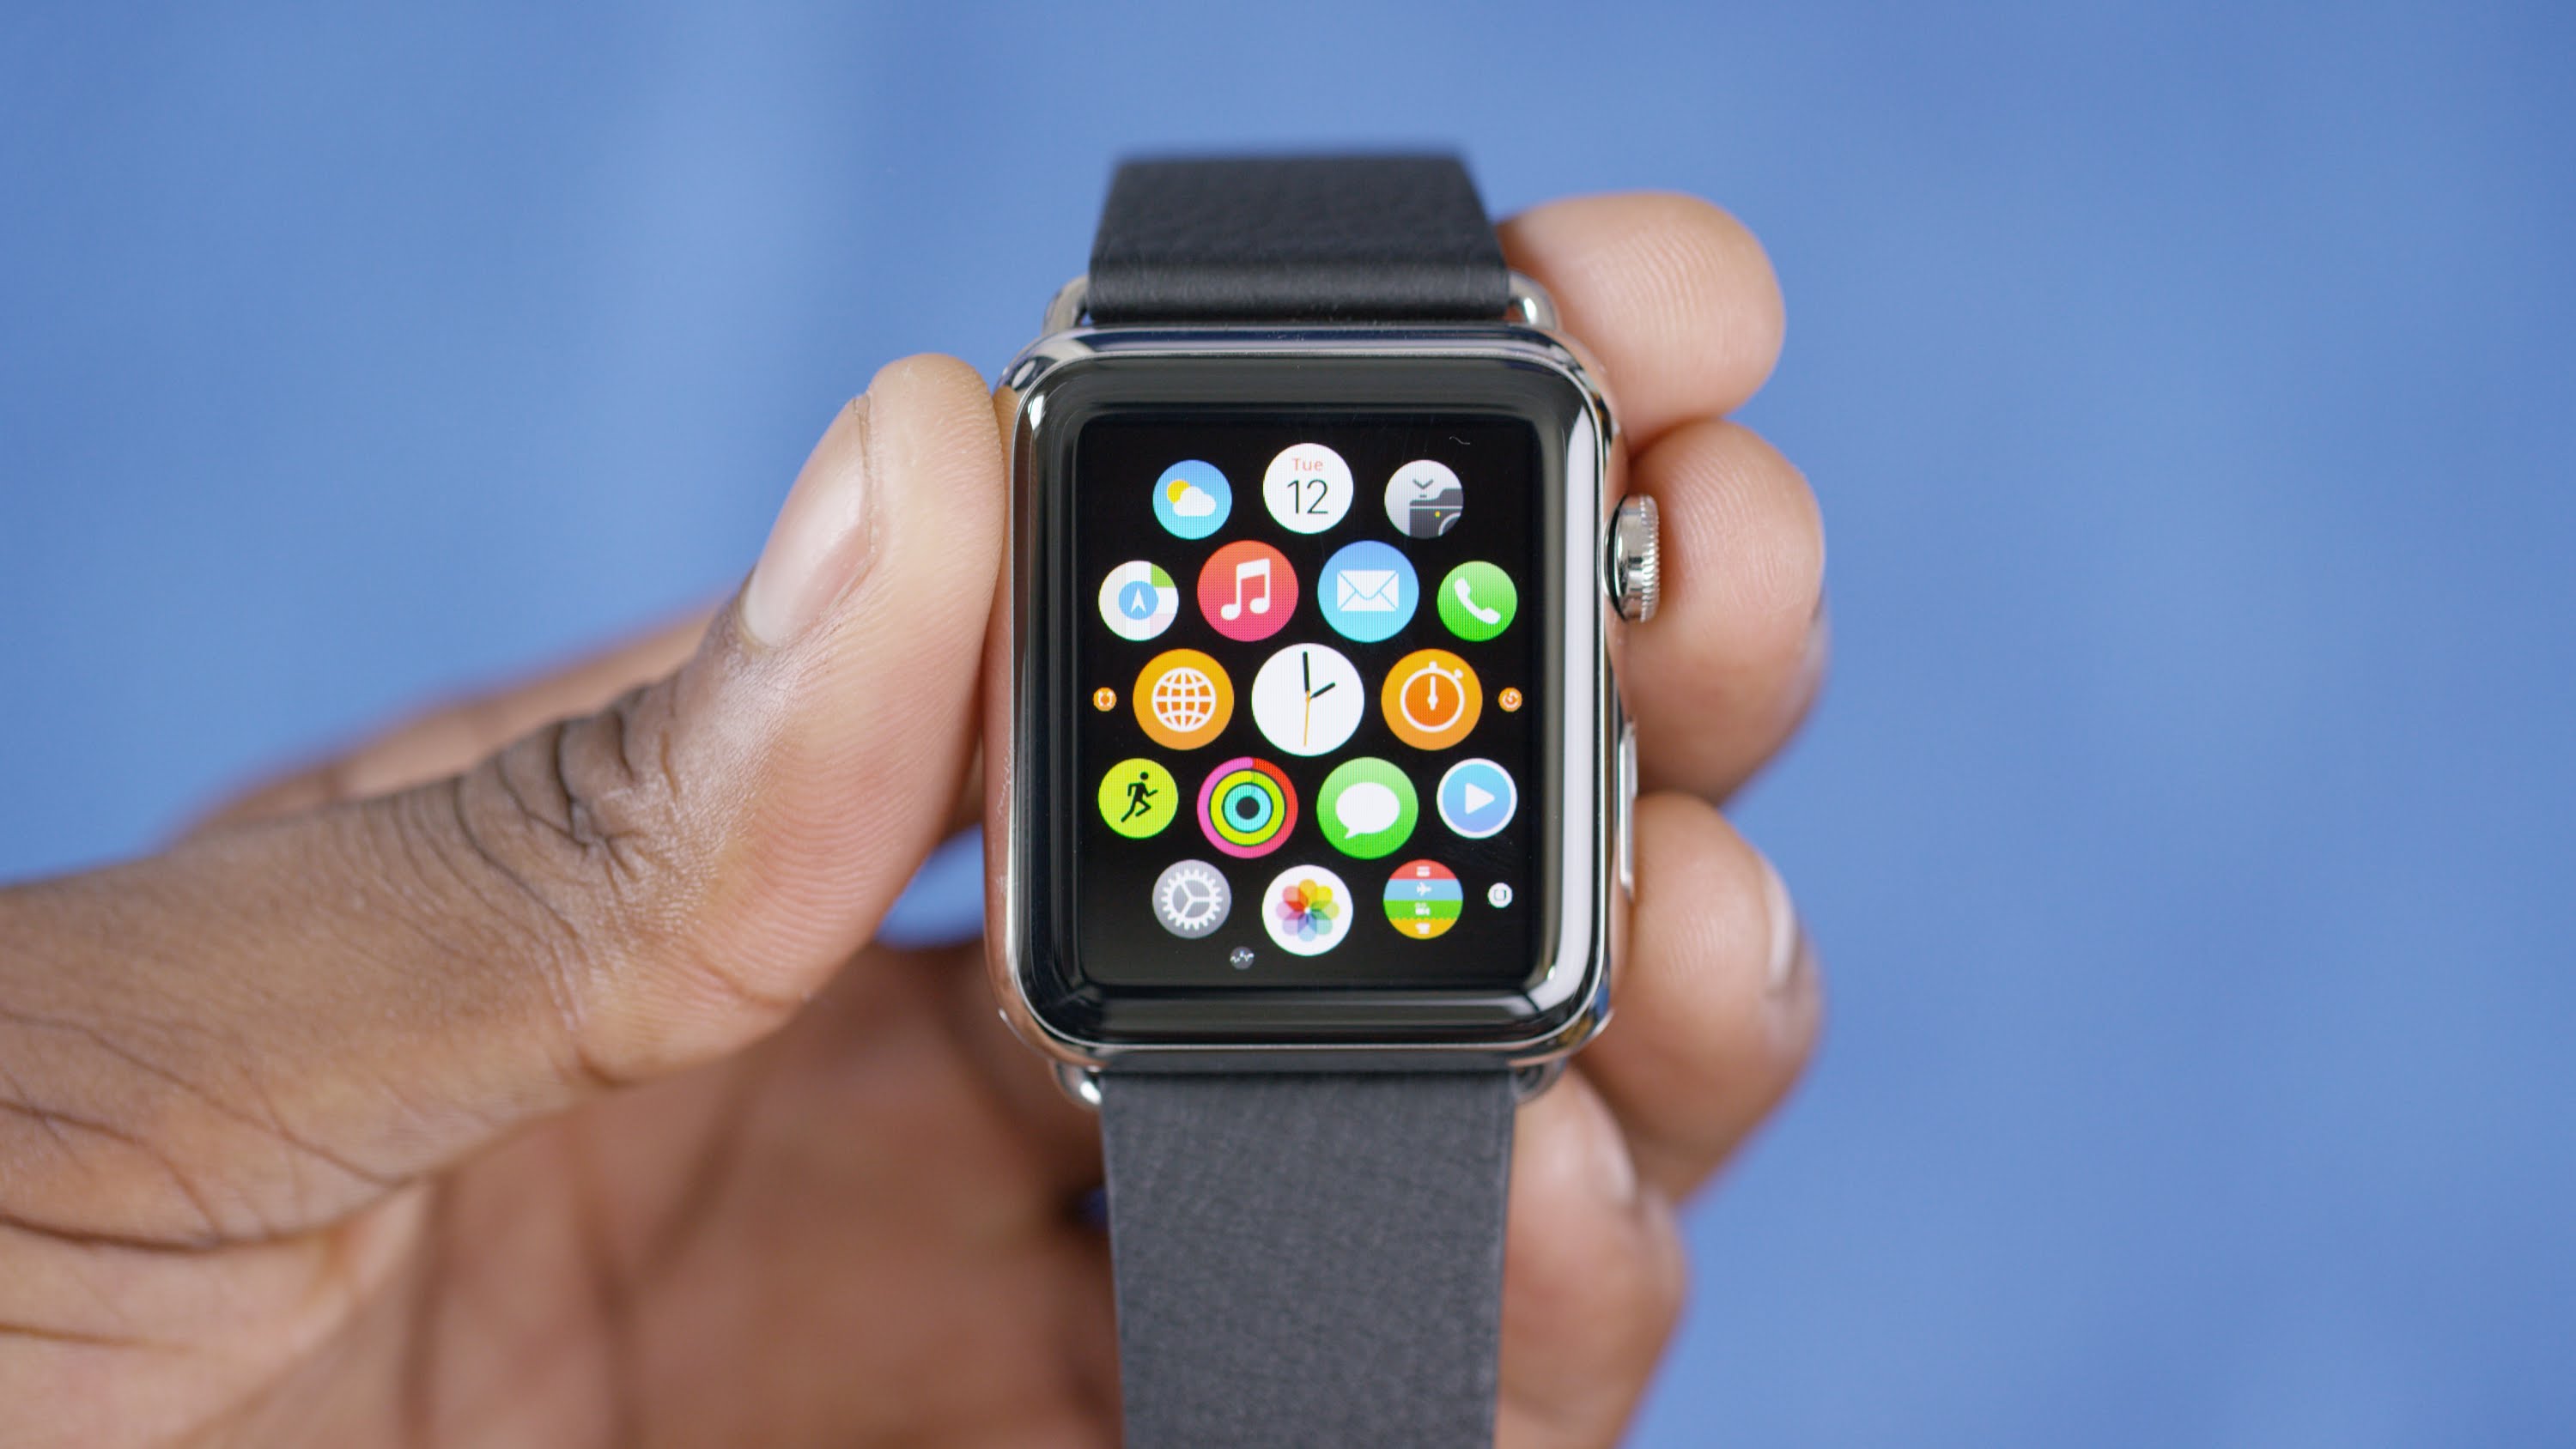 12 apple watch. АПЛ вотч 10. Apple watch 10. Apple watch 12. Apple 10 смарт часы.